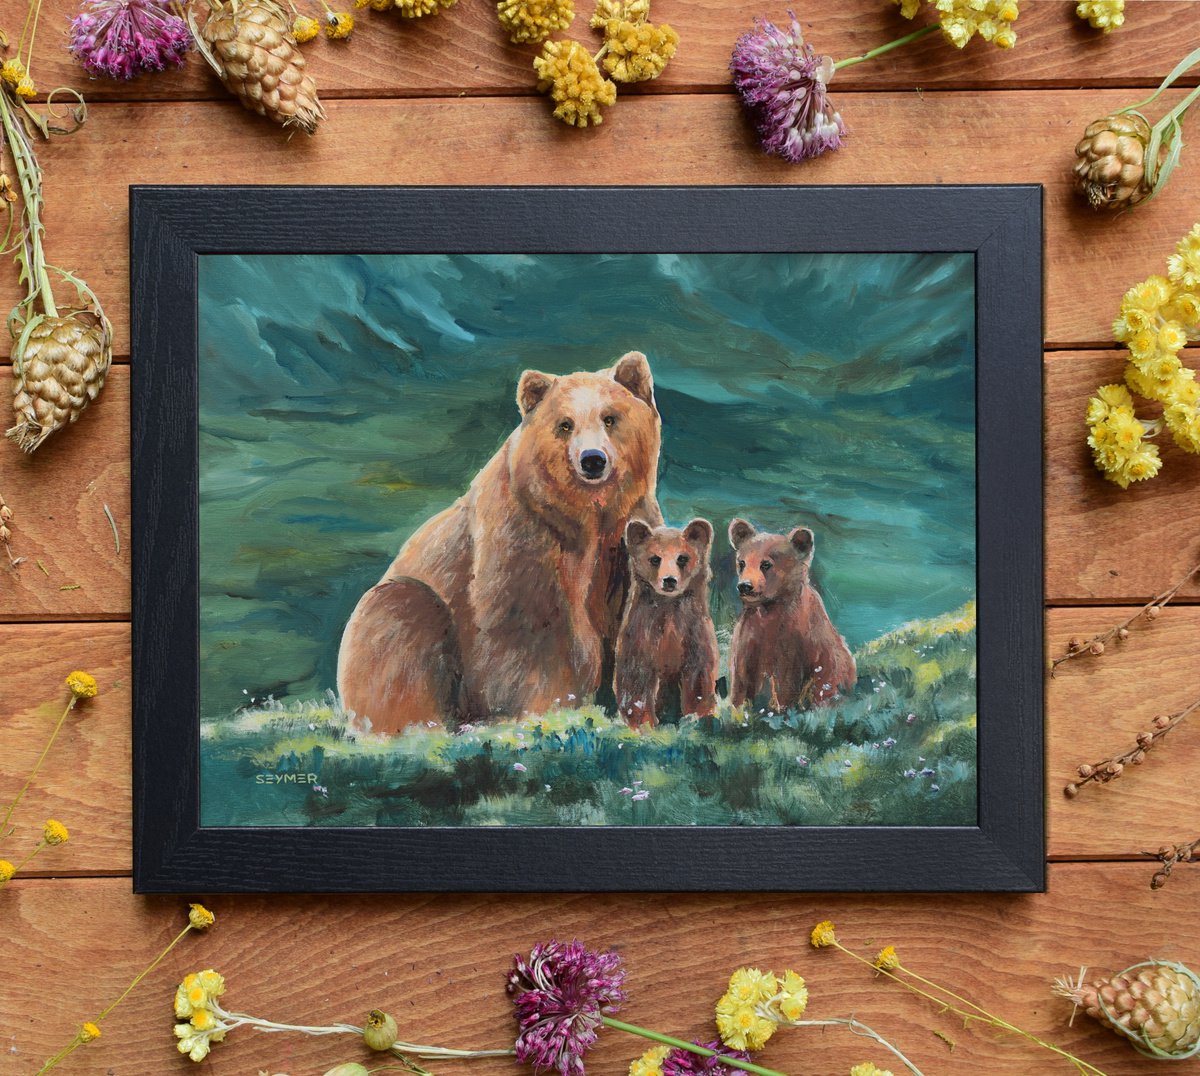 Mama Bear Art for Sale - Fine Art America